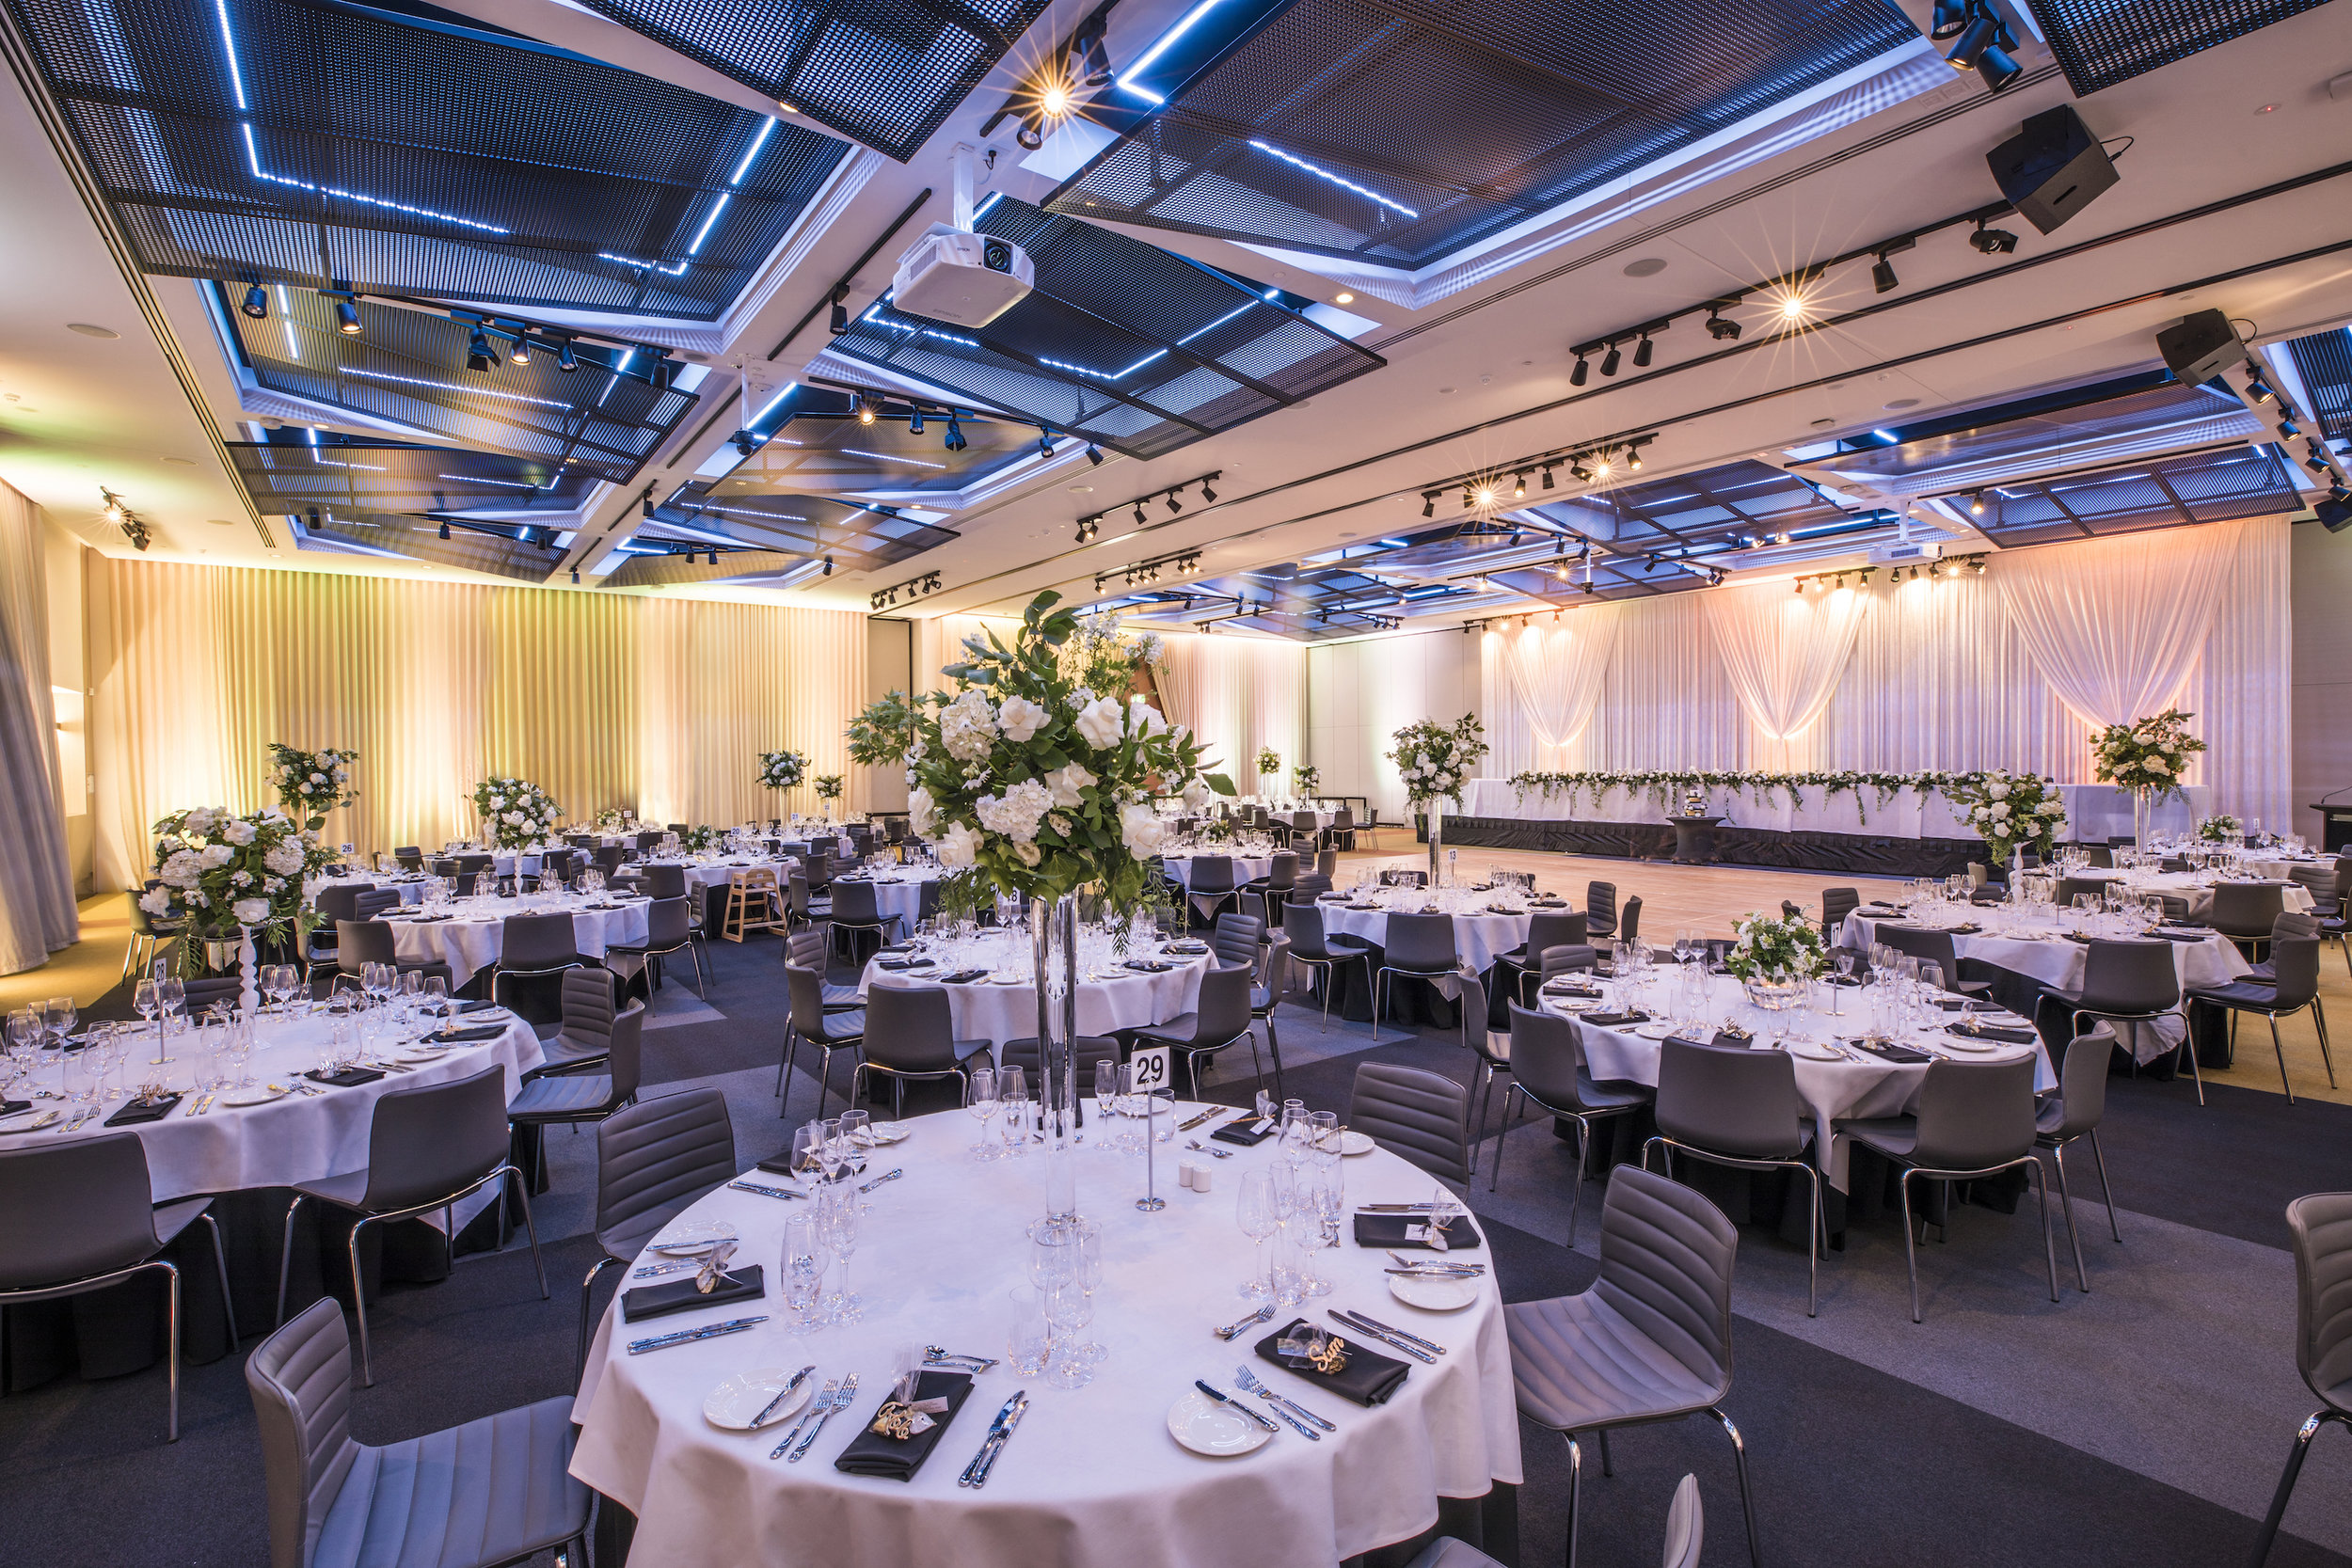 The Australian Rooms at Hyatt Place Melbourne wedding venue